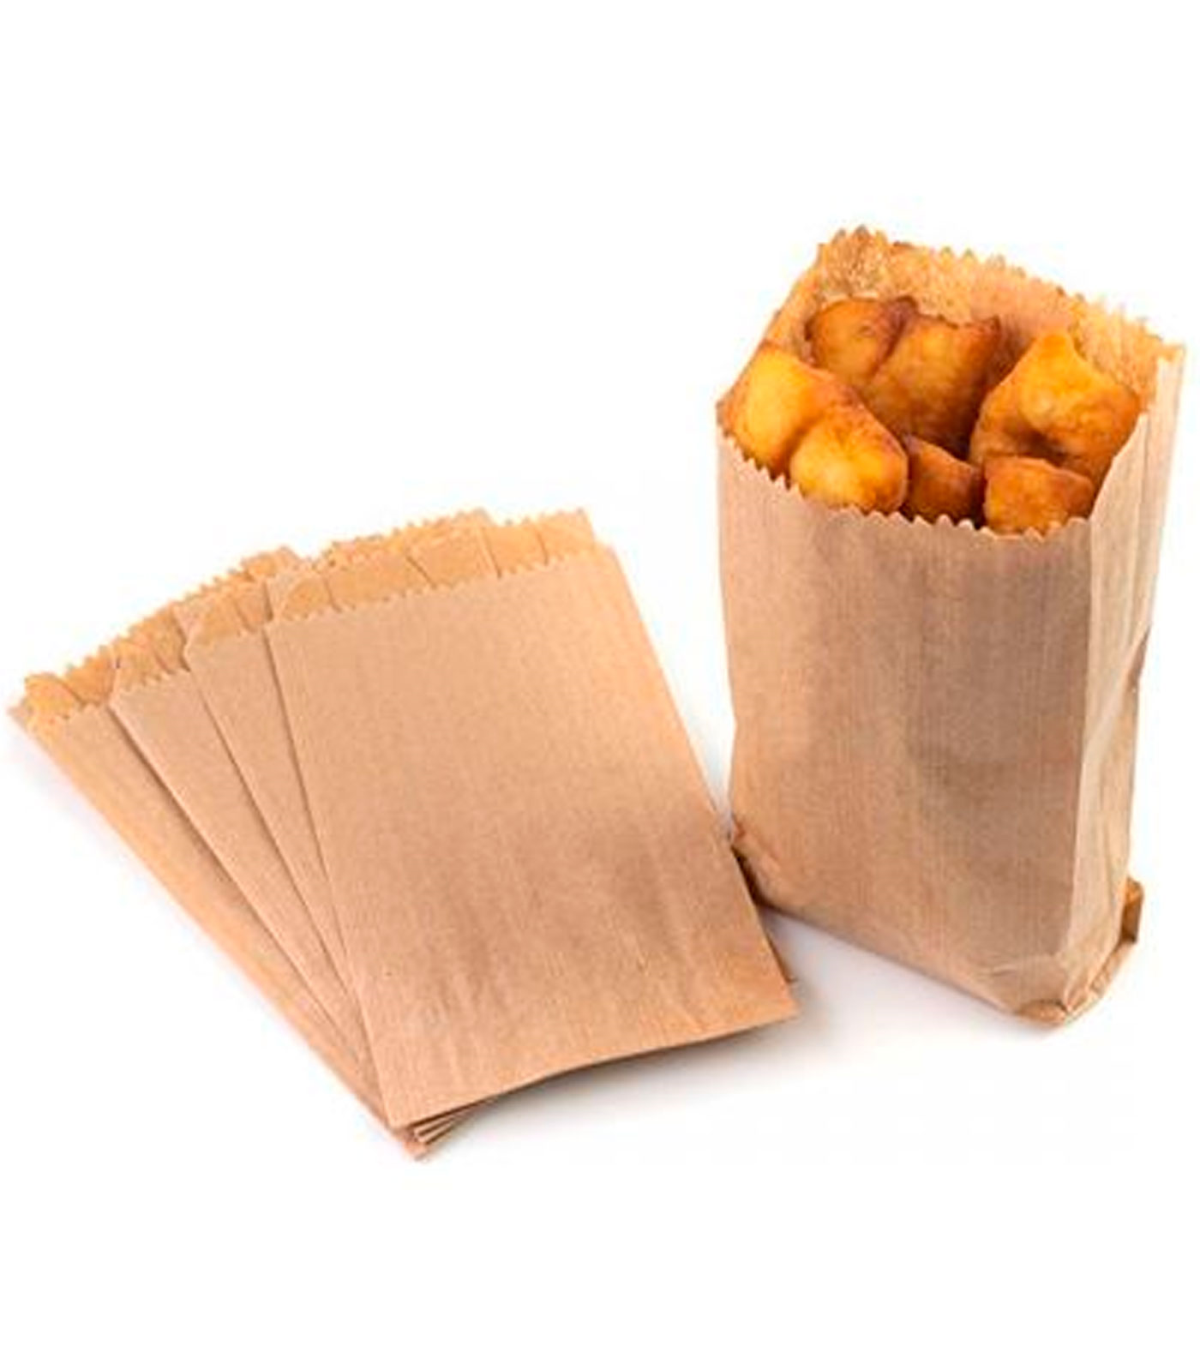 https://tradineur.com/98870-superlarge_default/tradineur--pack-de-25-bolsas-de-papel-kraft-para-alimentos-biodegradables-compostables-reutilizables-aptas-para-uso-alimentario-.jpg